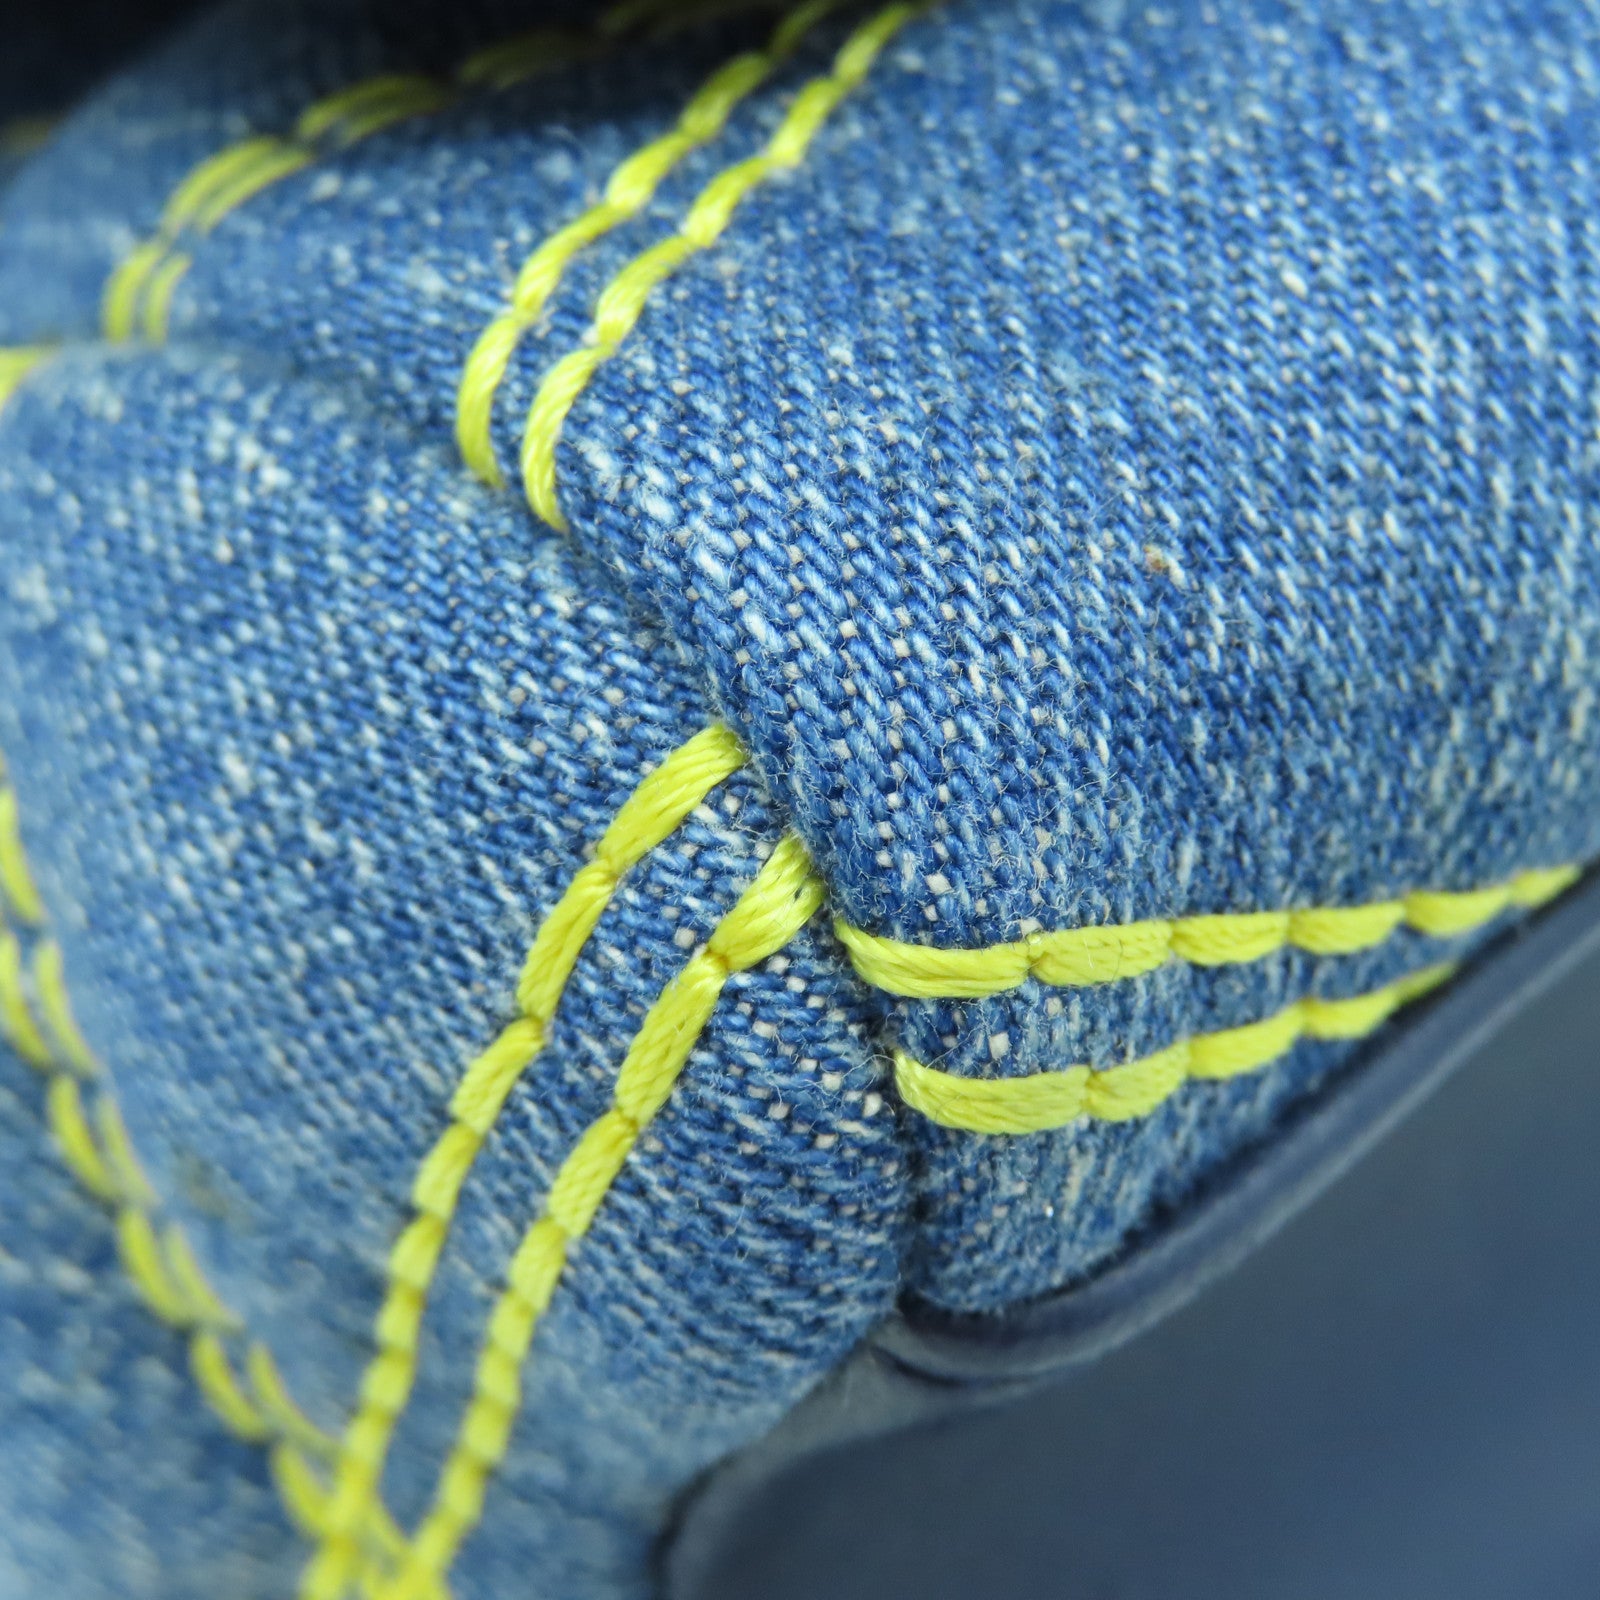 LOUIS VUITTON Lingge Damier Jeans ジgo-14 PM Shoulder Bag Gold Buckle C –  Brand Off Hong Kong Online Store